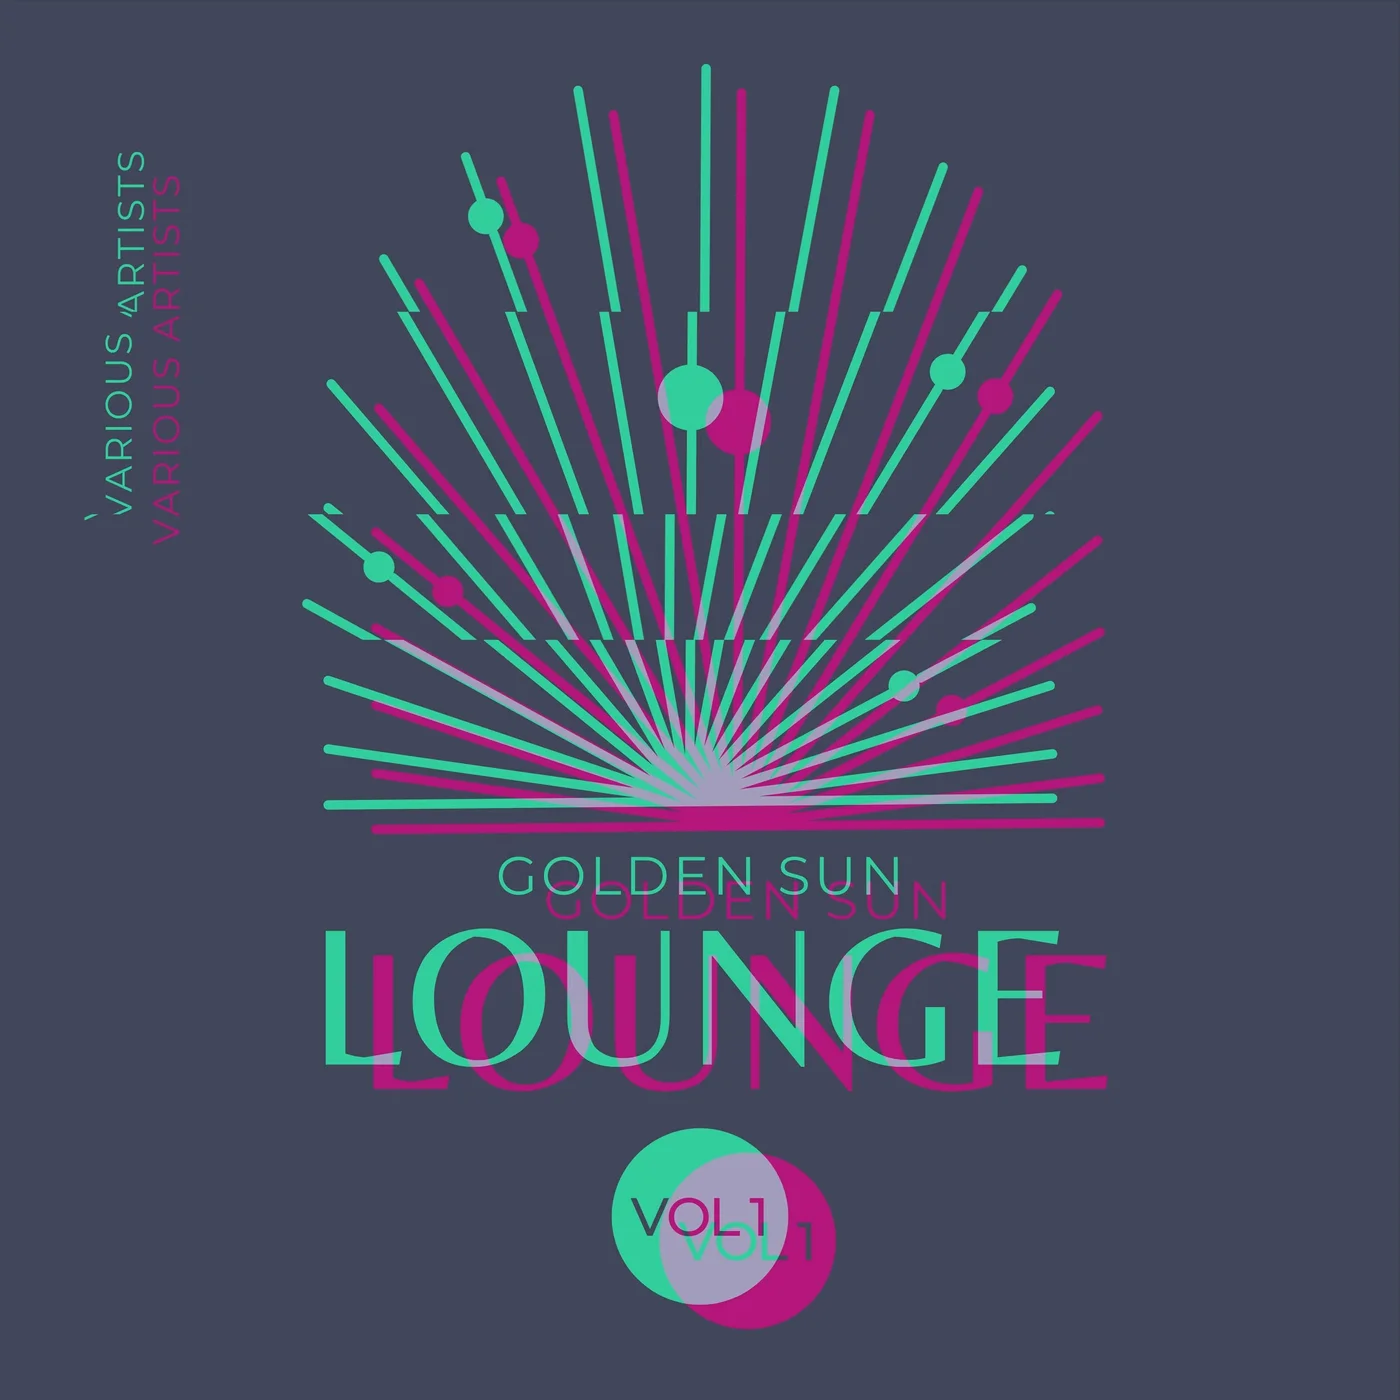 Cover von Compilation "Golden Sun Lounge, Vol. 1"